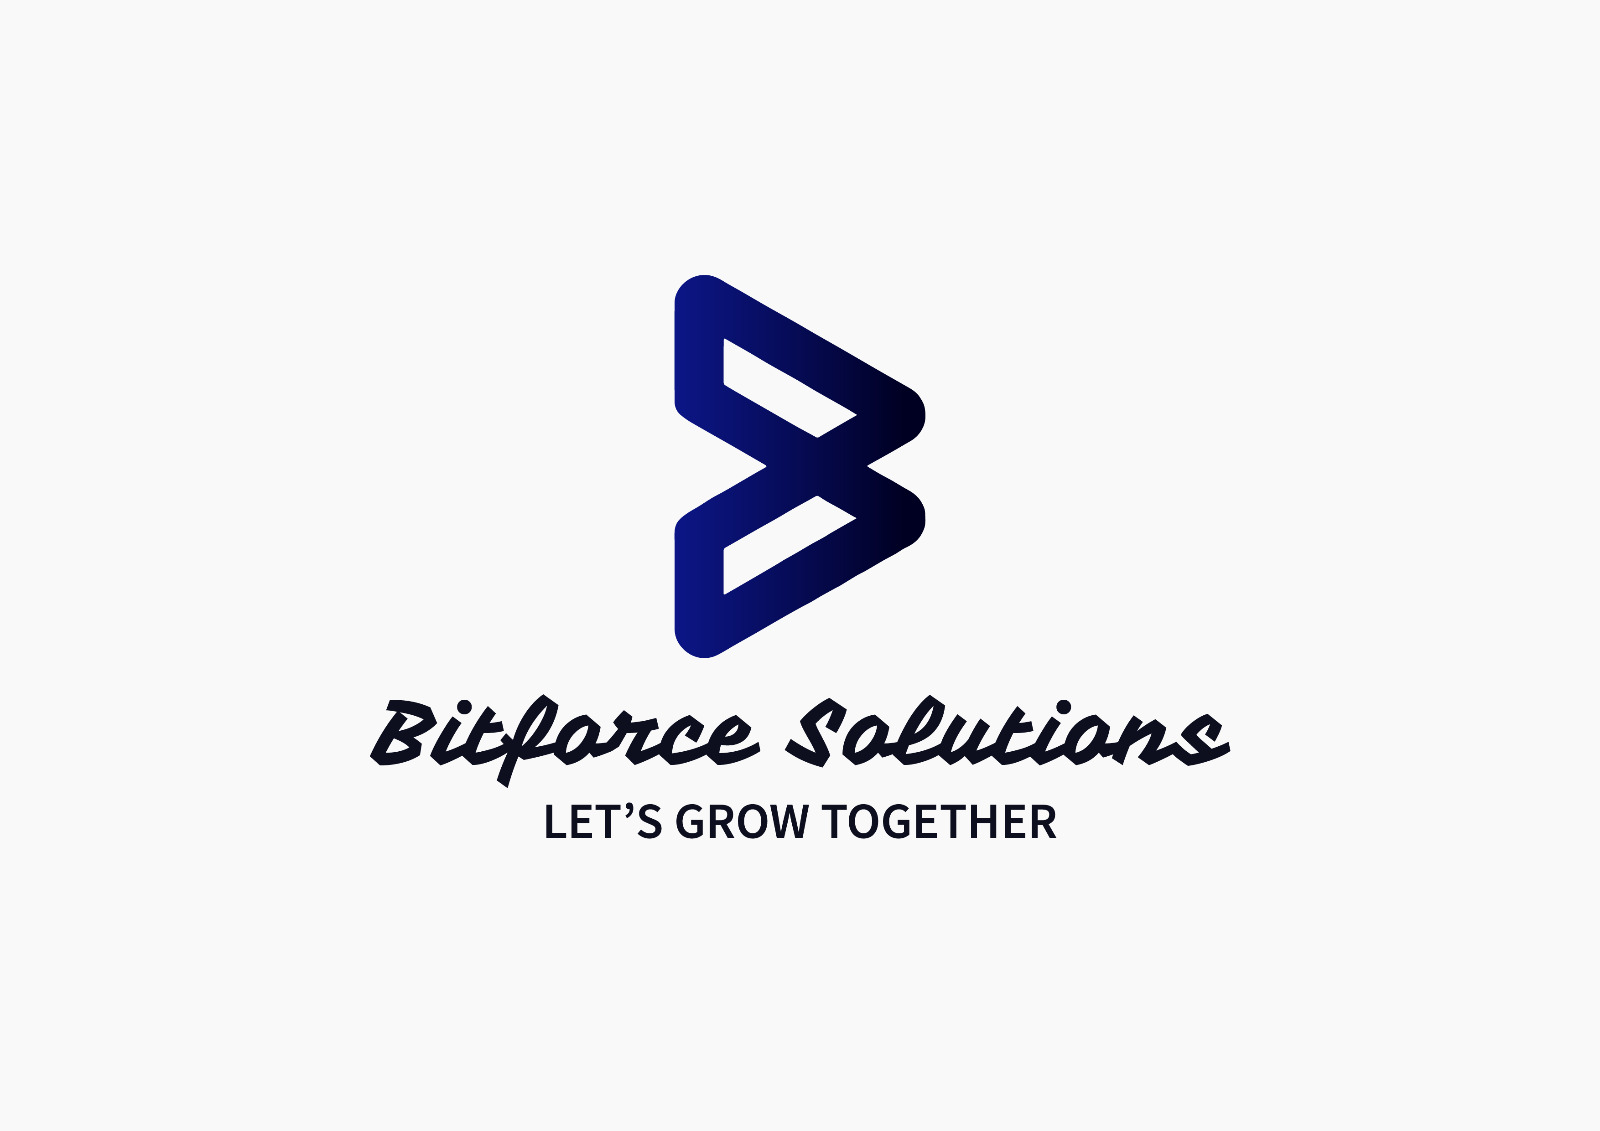 Bitforce Solutions